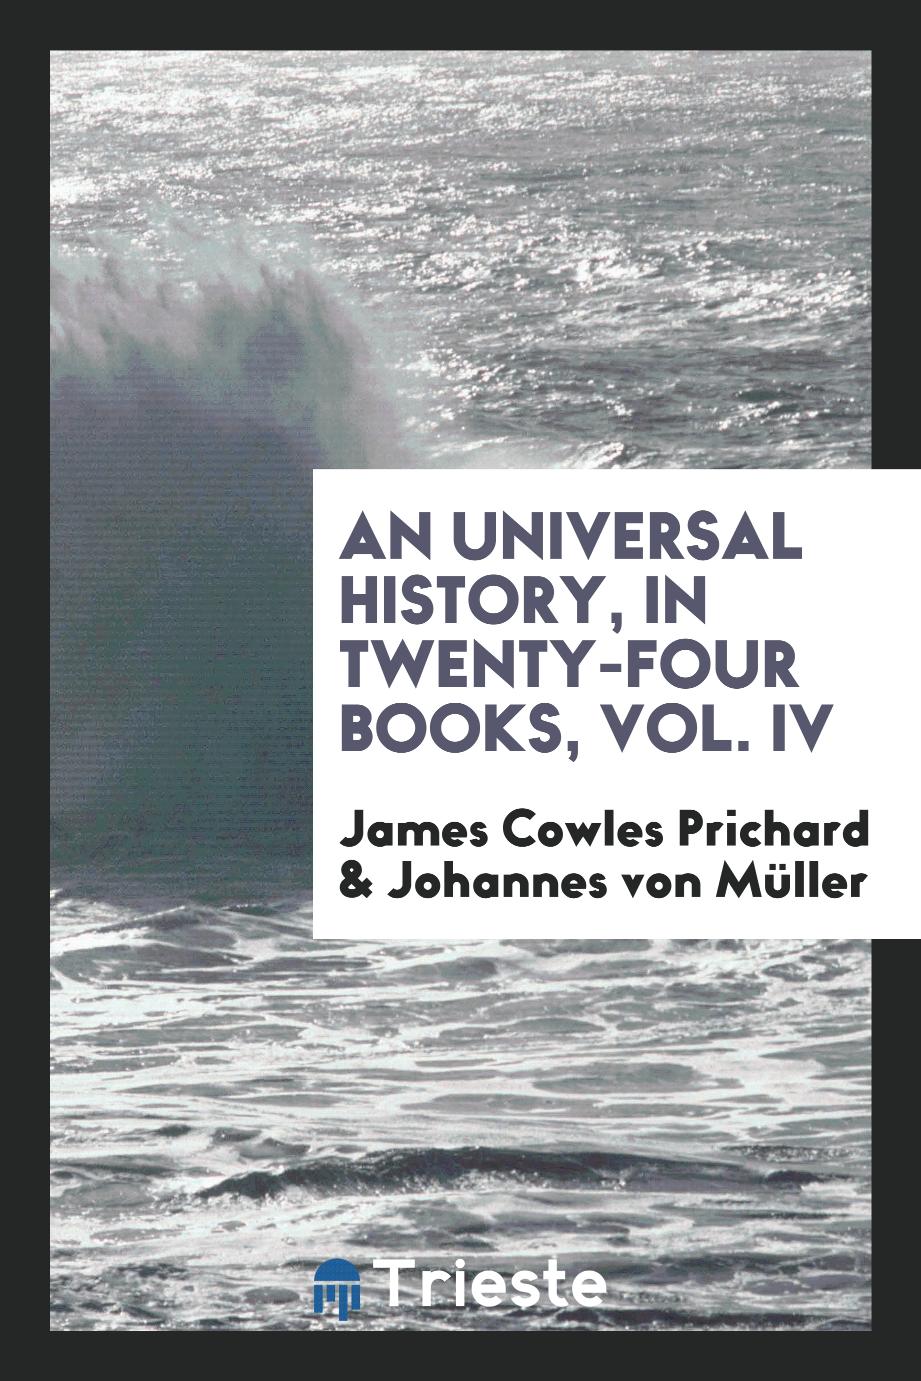 An Universal History, in Twenty-Four Books, Vol. IV